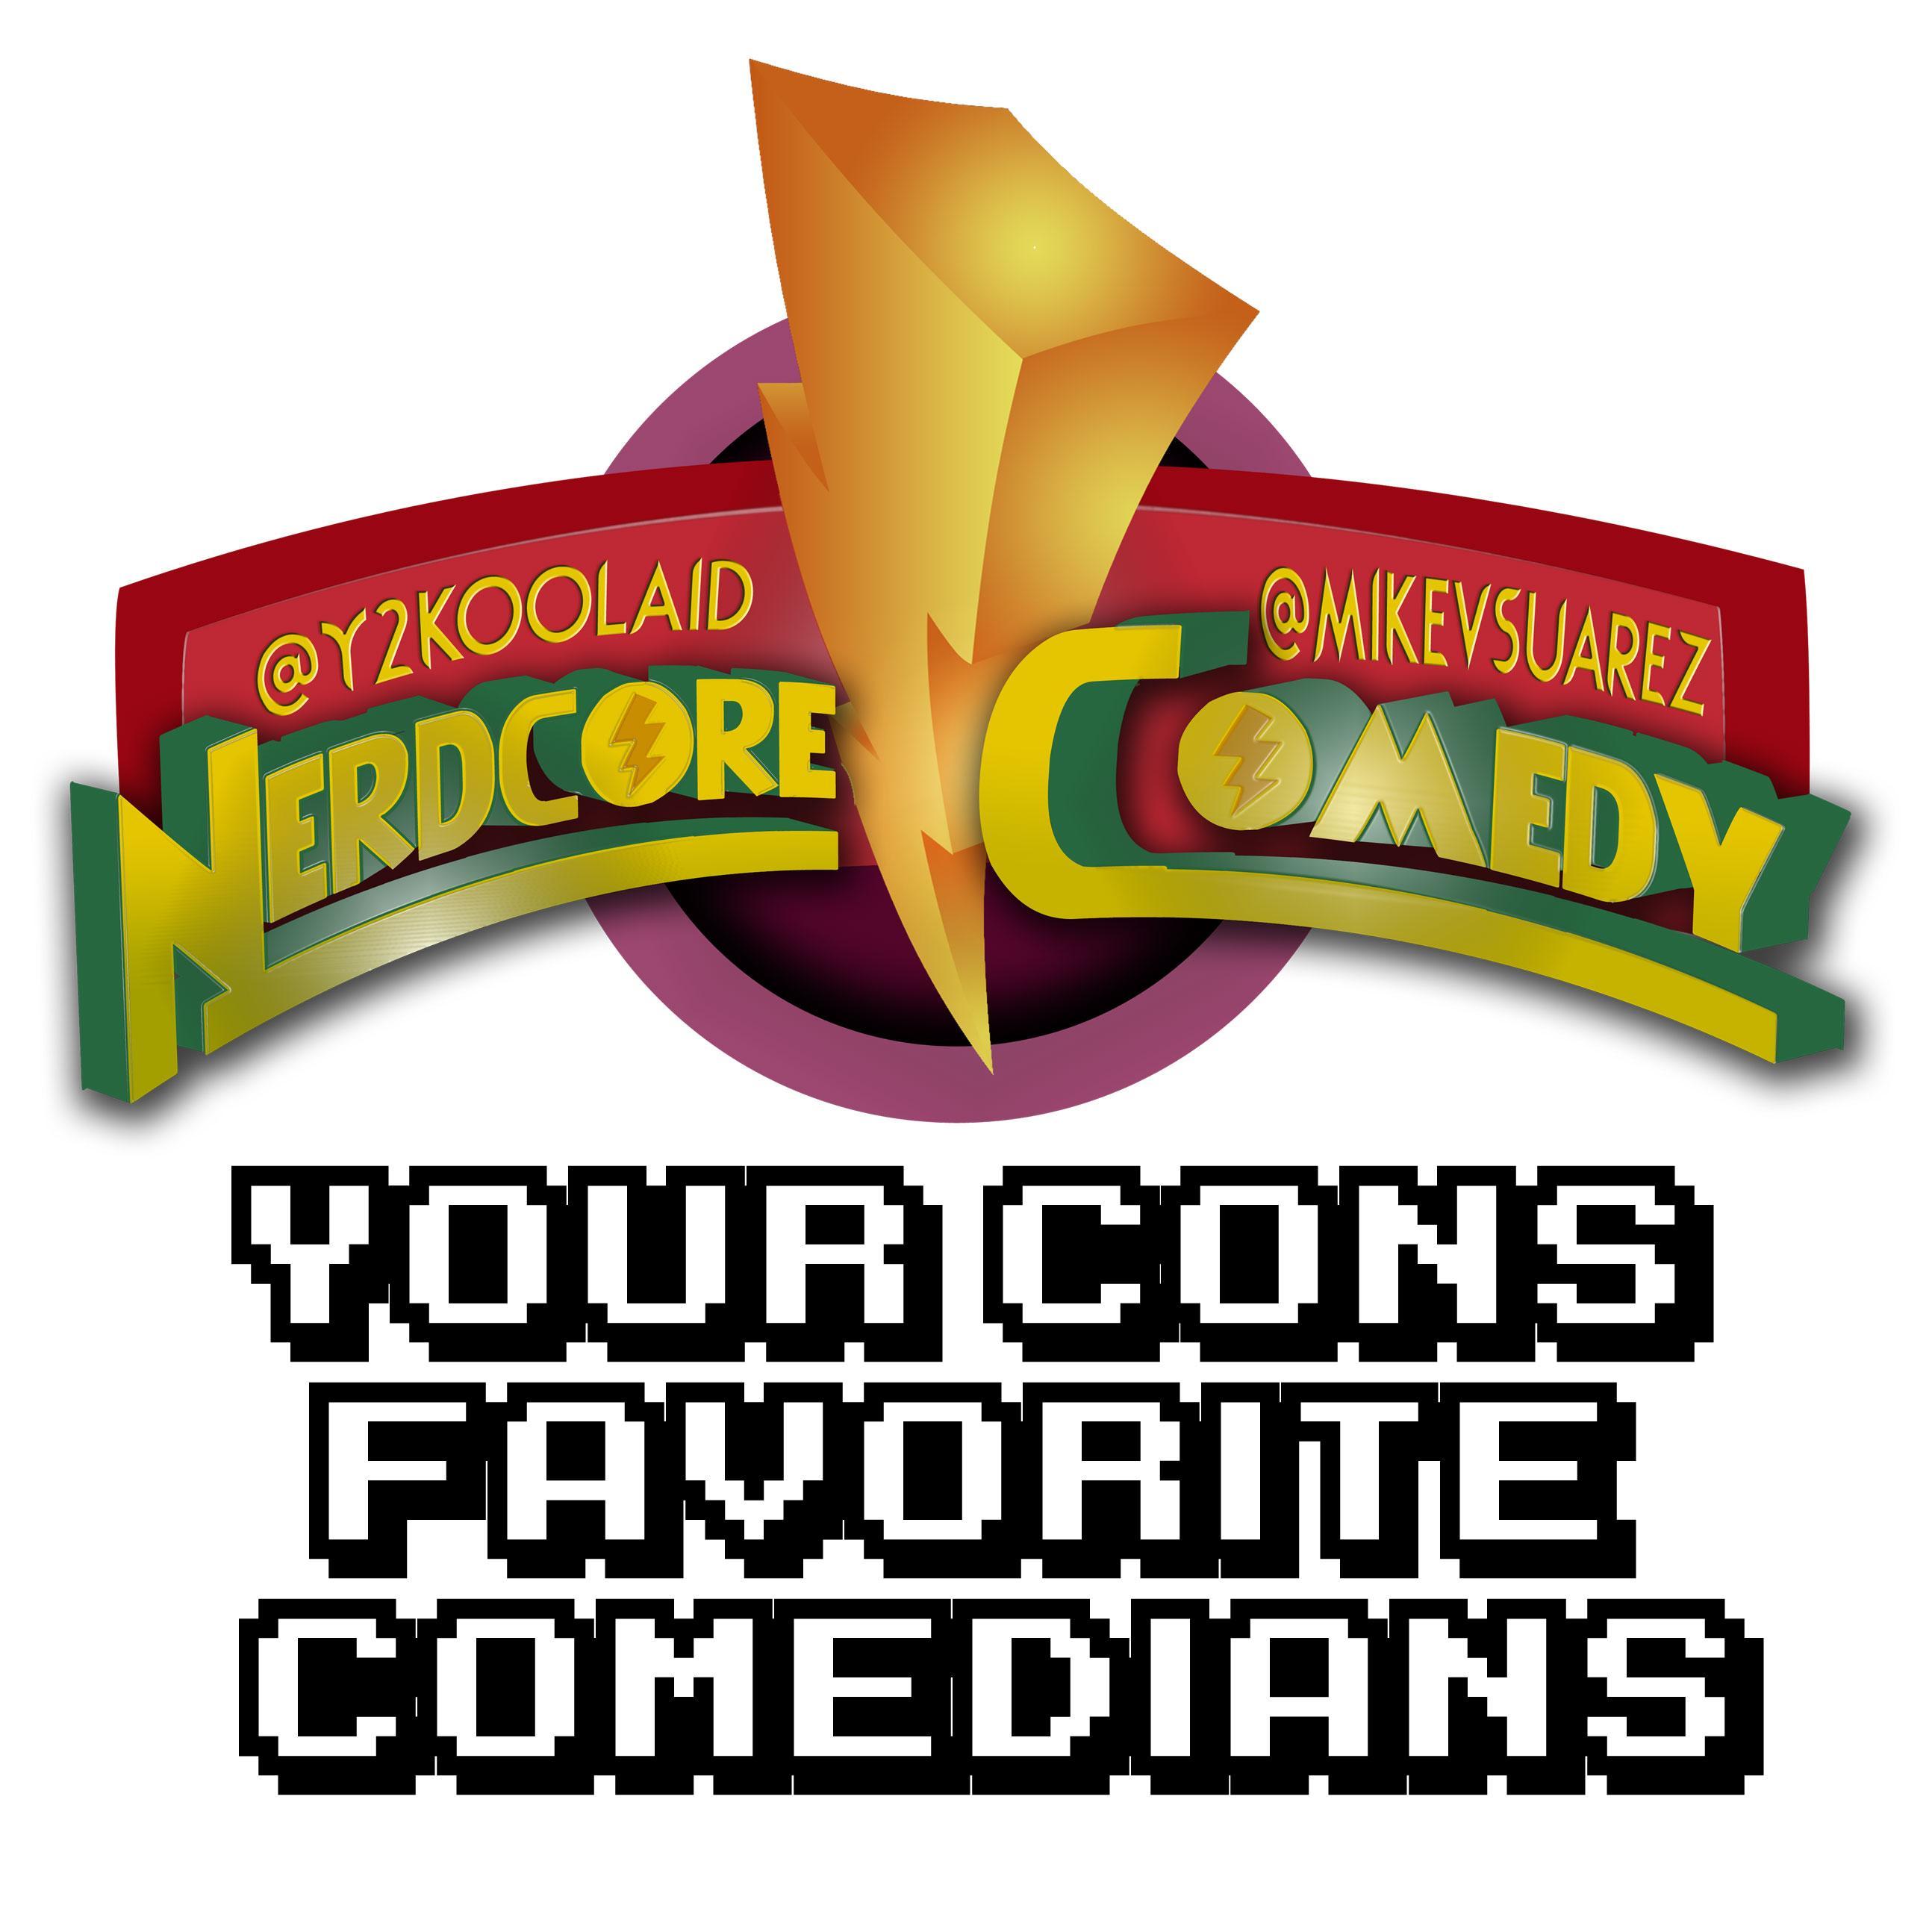 Nerdcore Comedy Shows, coming to a Con, Videogame, Comic Book Shop or Club Near You!